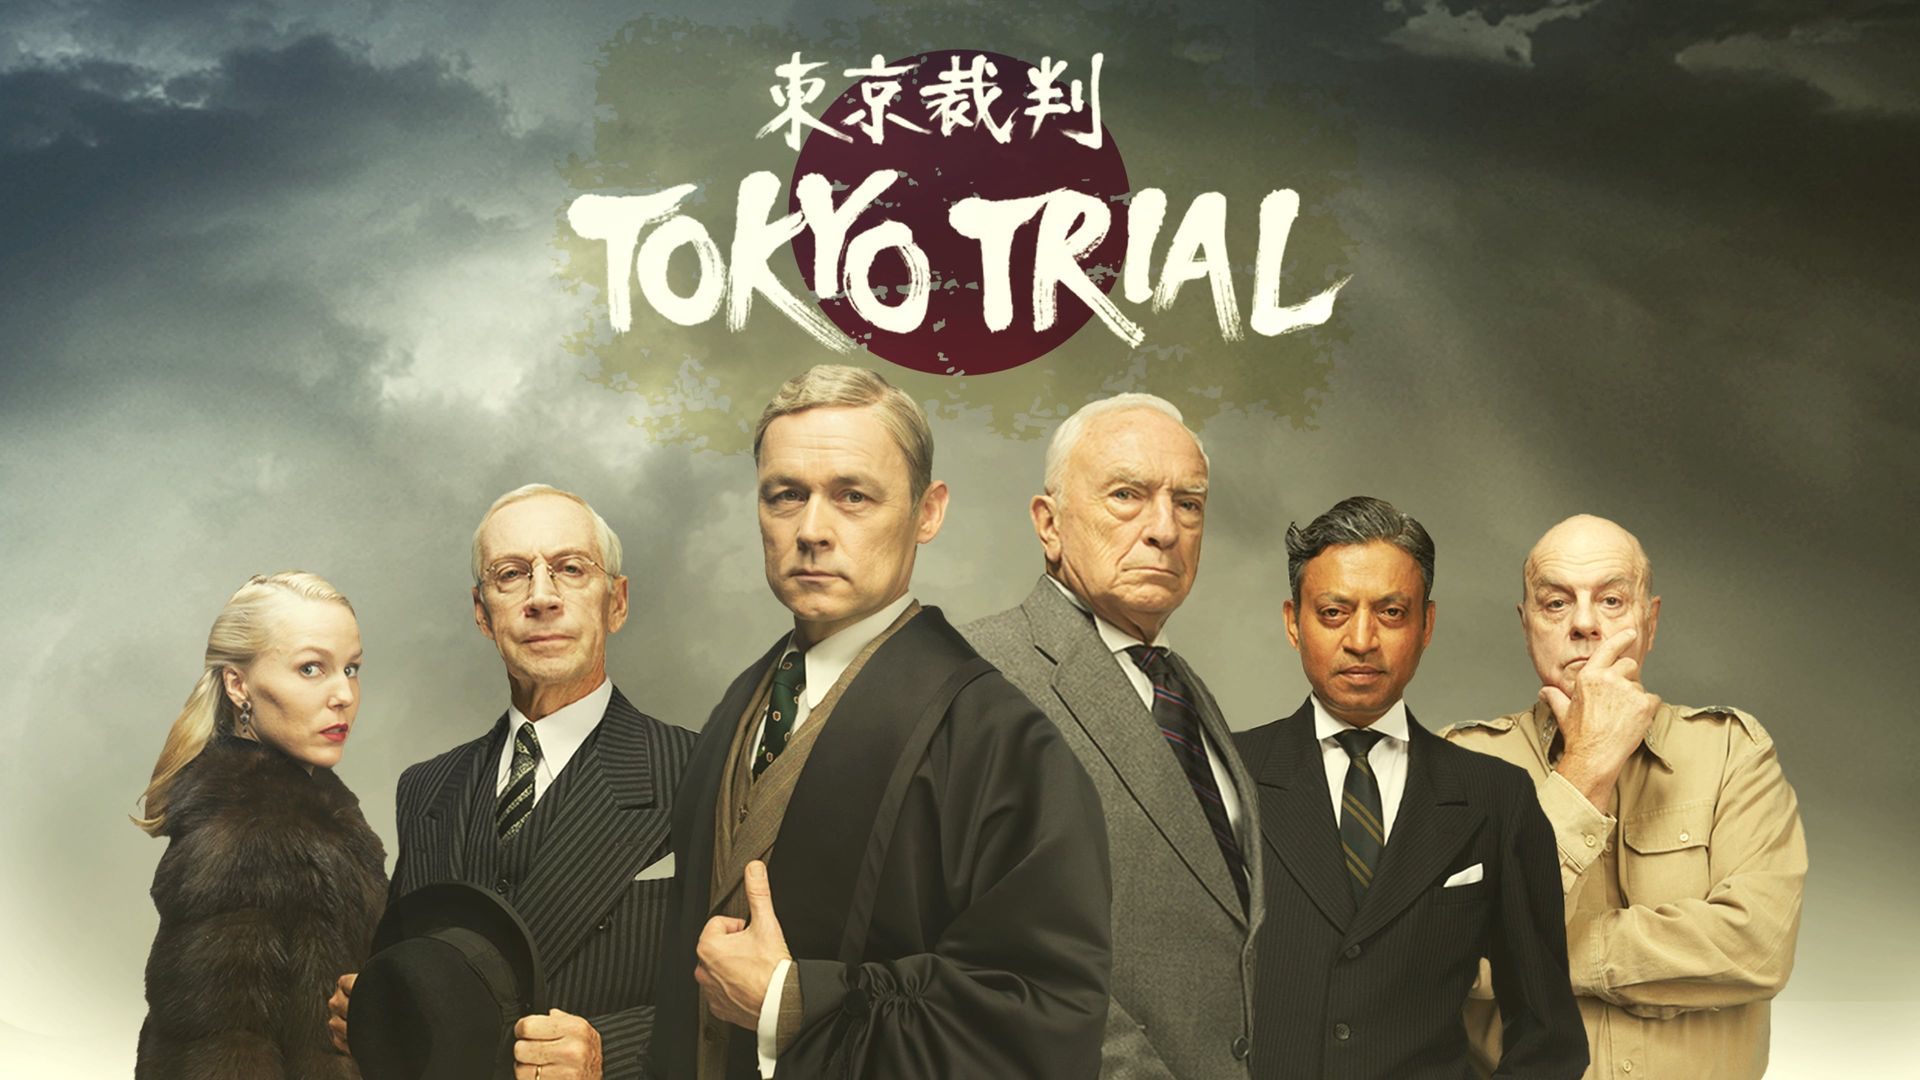 Tokyo Trial background